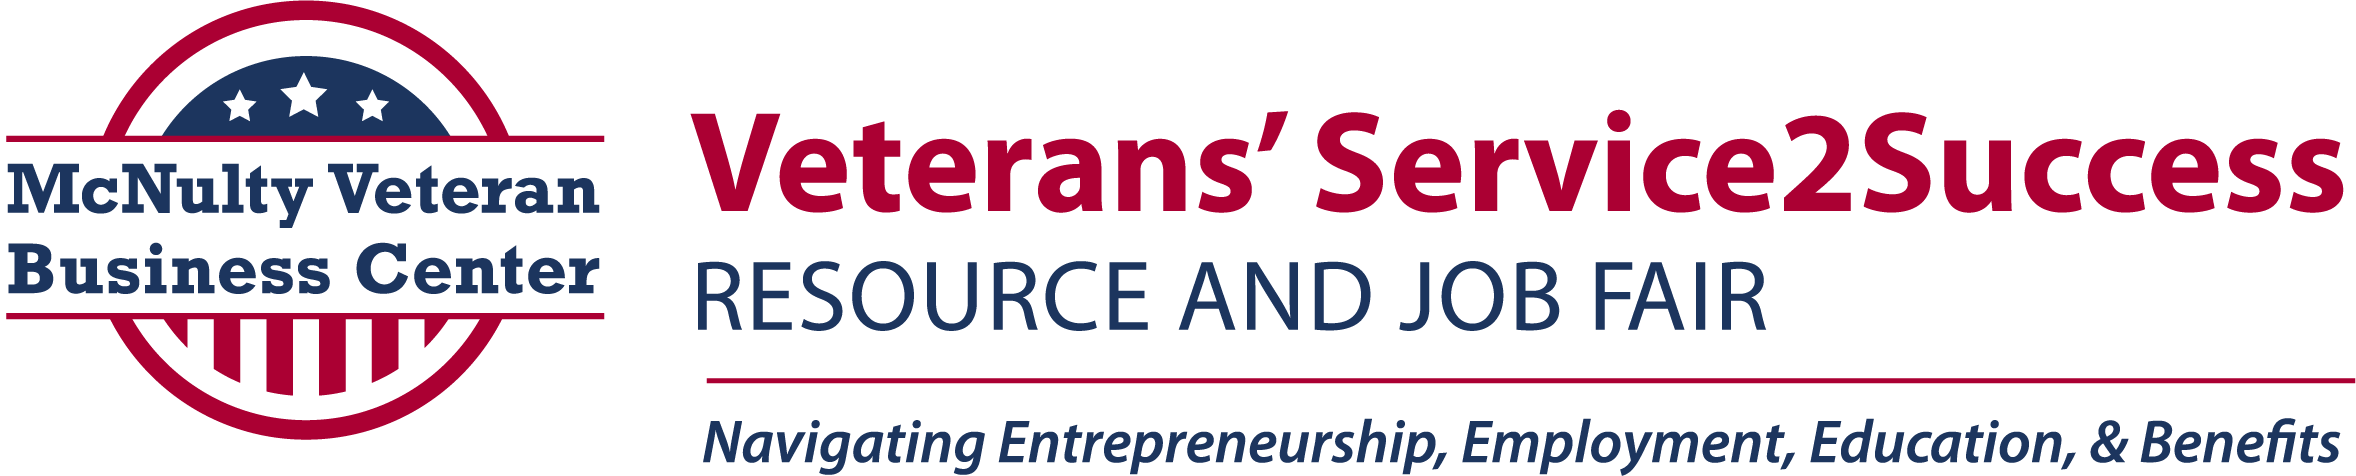 Veterans' Service2Success Resource and Job Fair